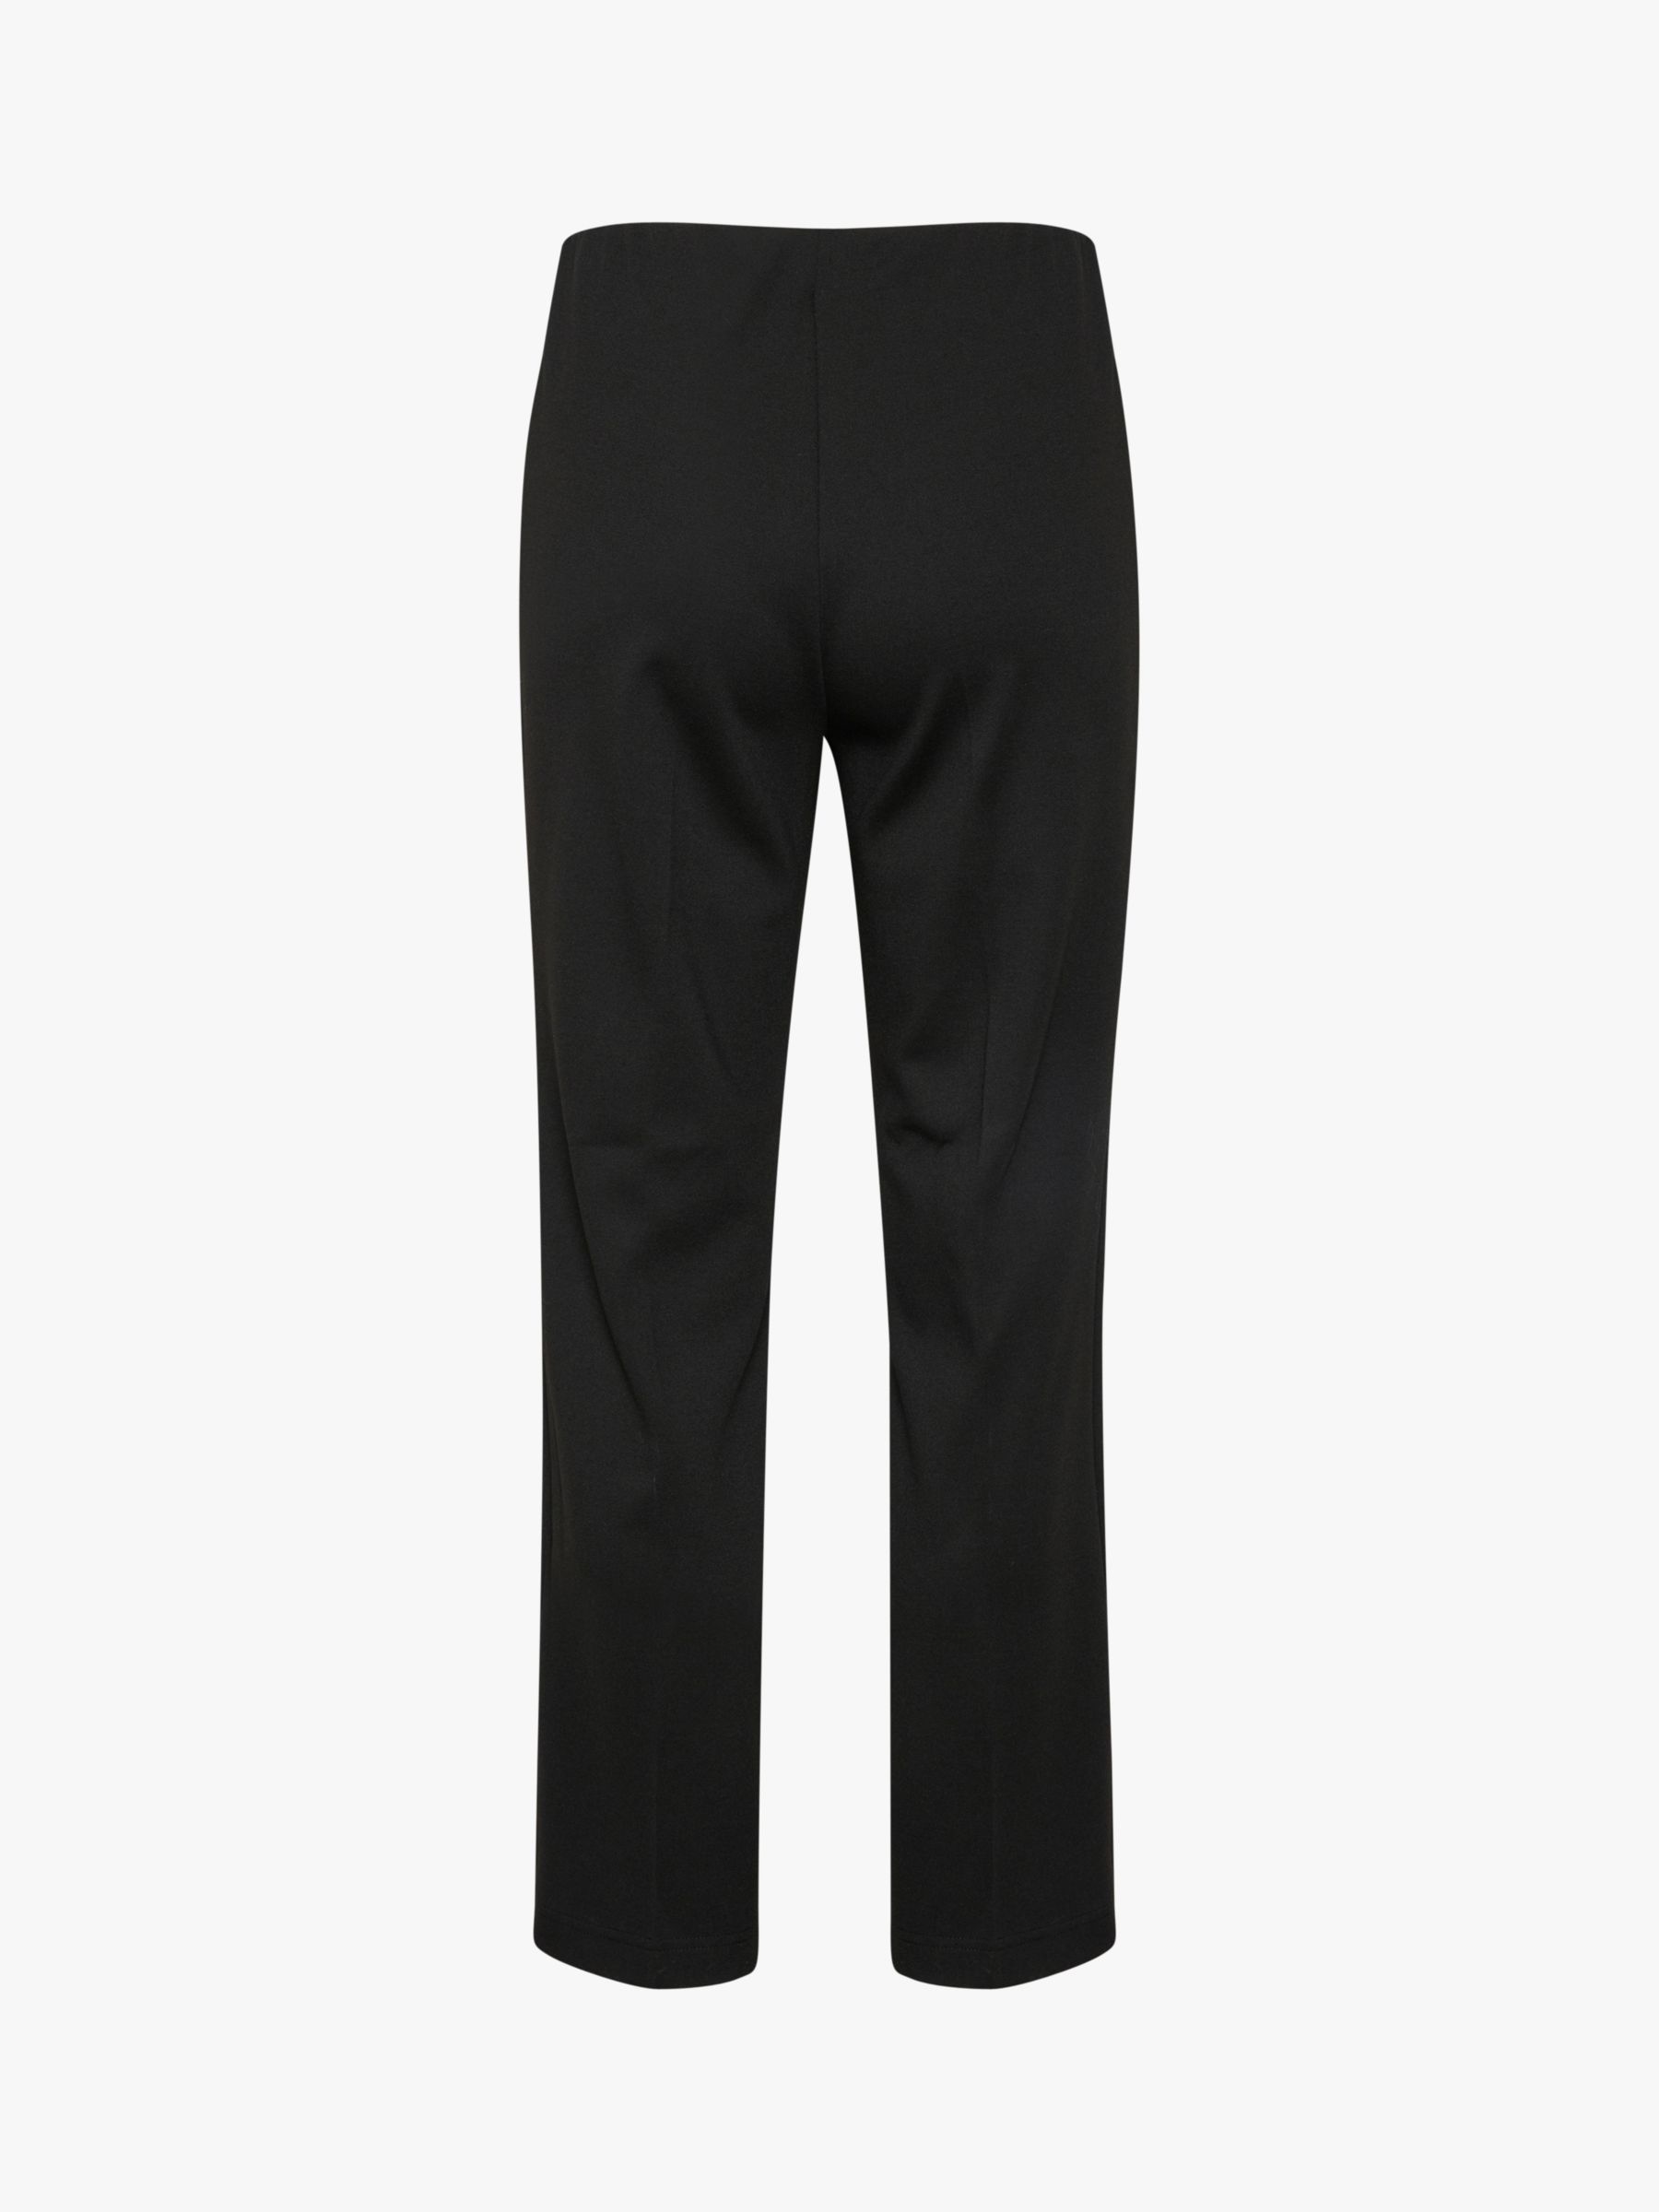 Buy Saint Tropez Kaileen Ankle Grazer Trousers, Black Online at johnlewis.com